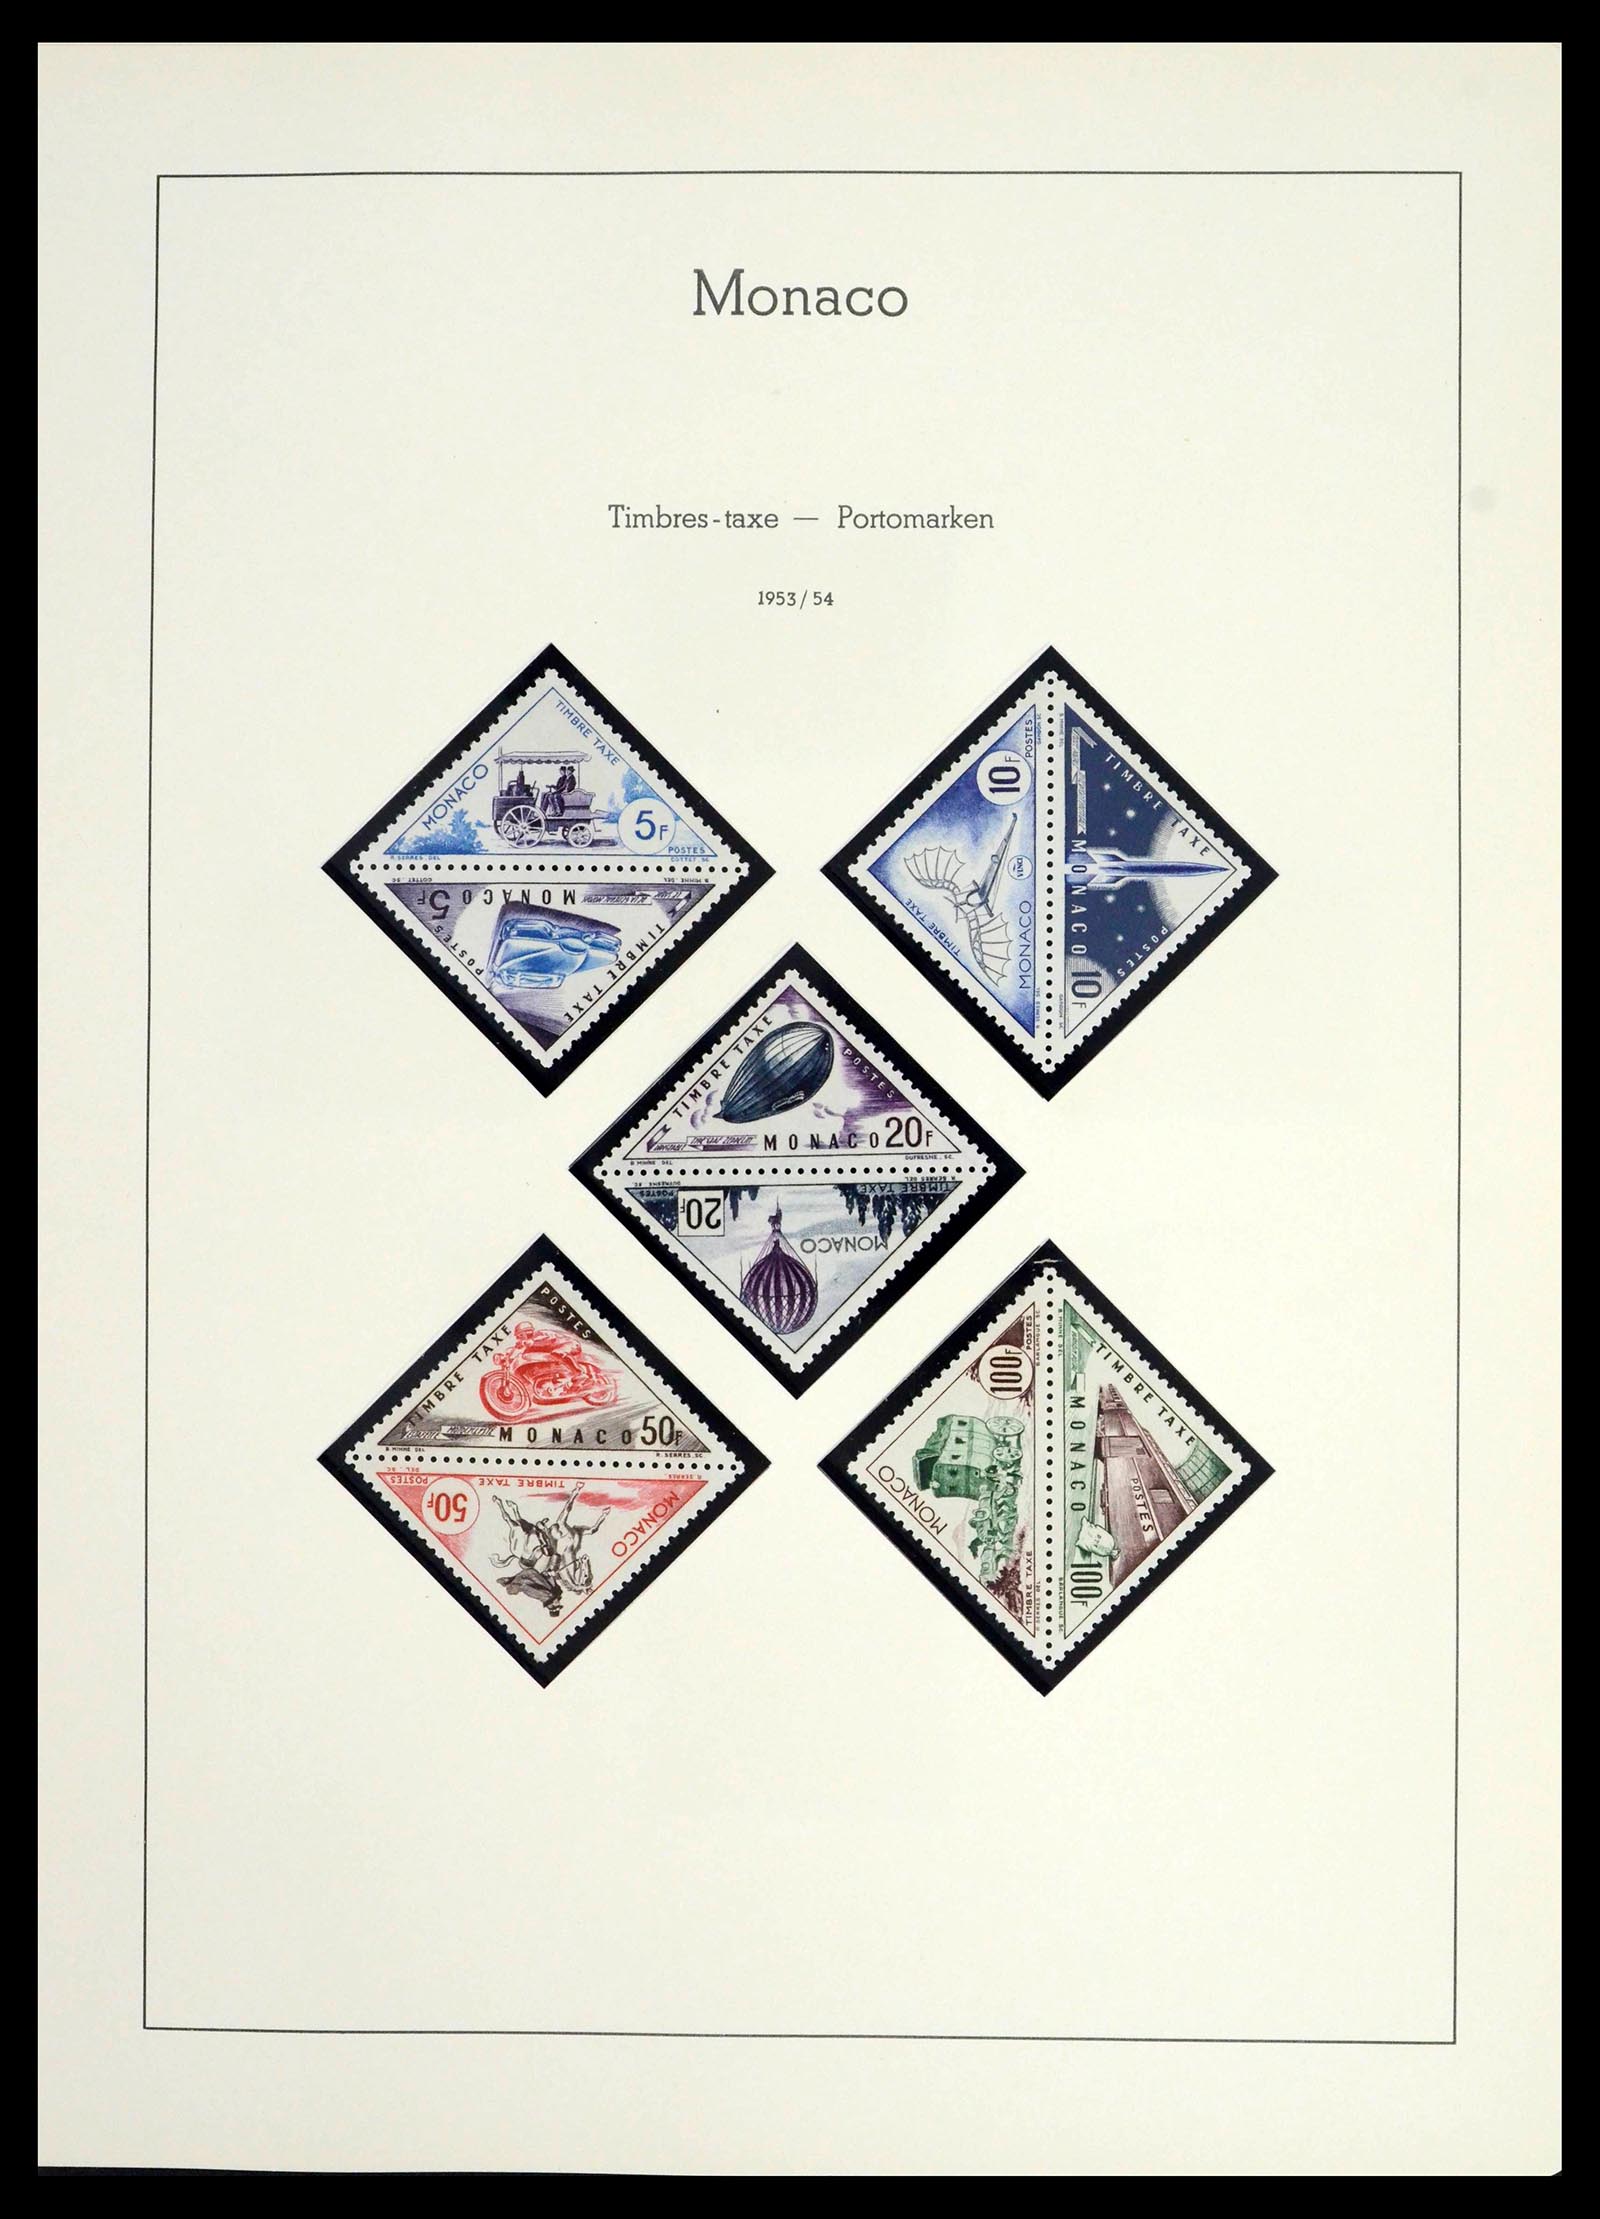 39392 0322 - Stamp collection 39392 Monaco 1885-1999.